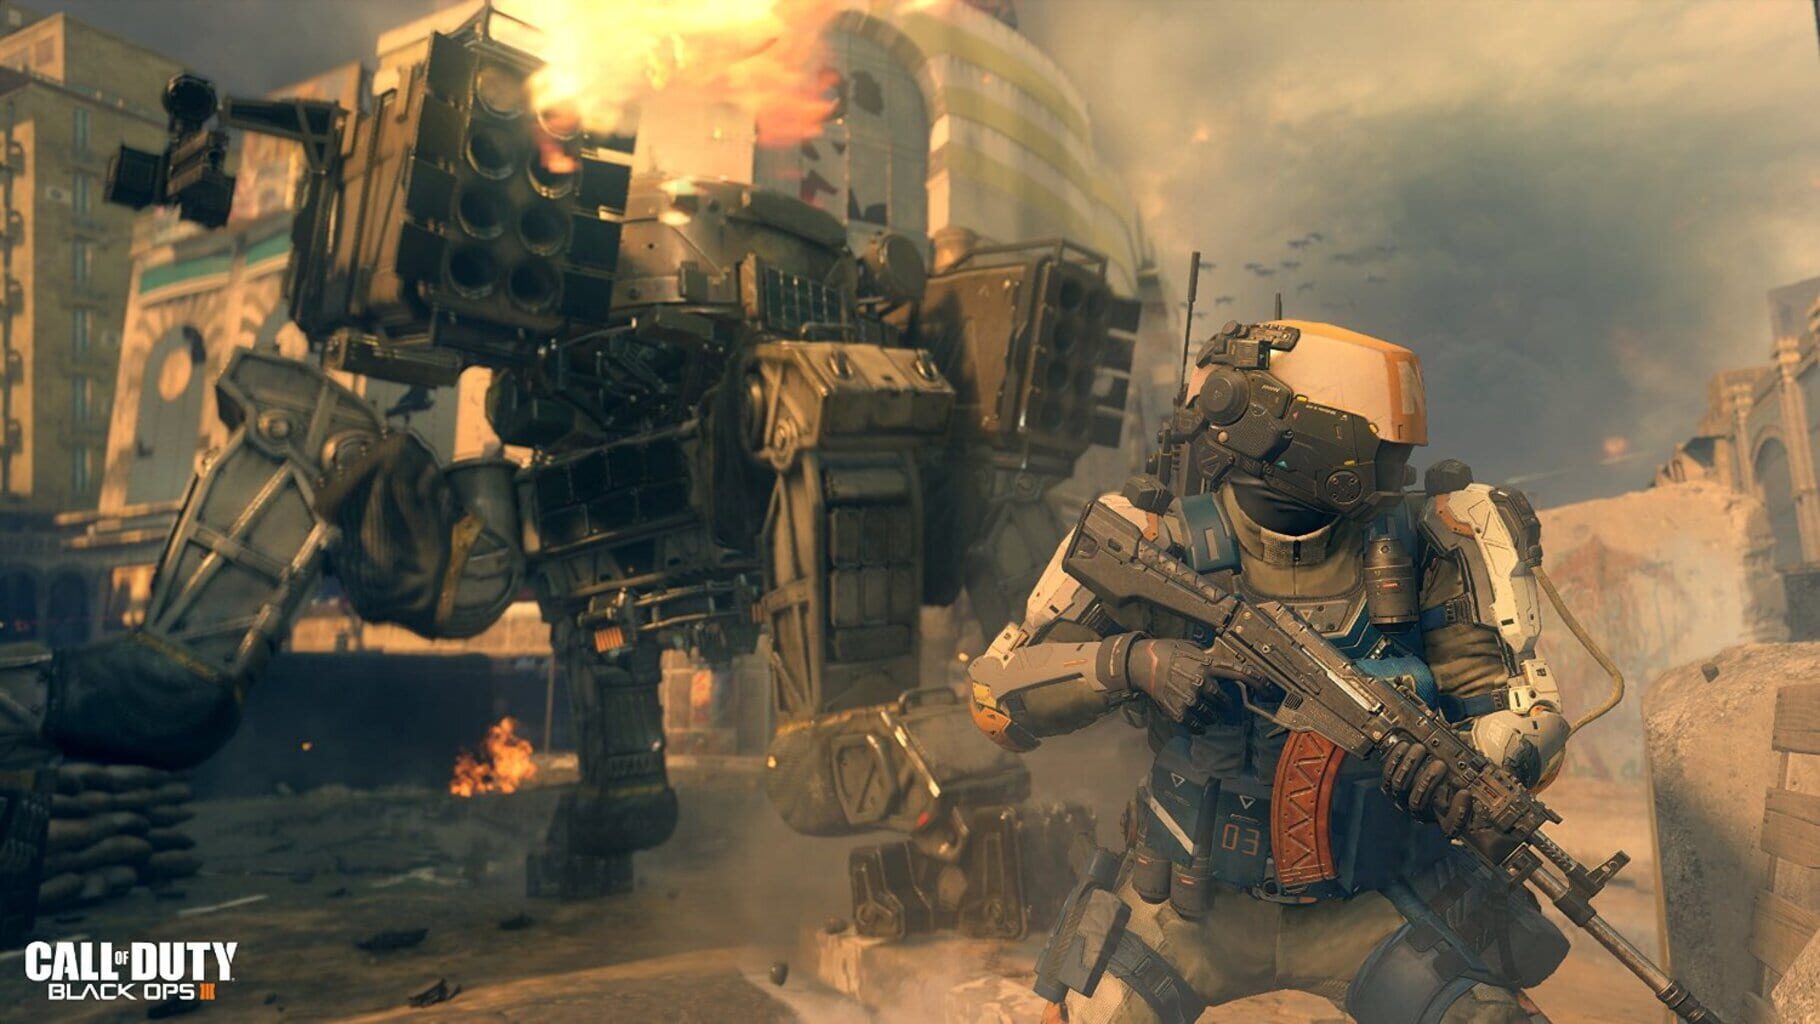 Call of Duty: Black Ops III screenshots